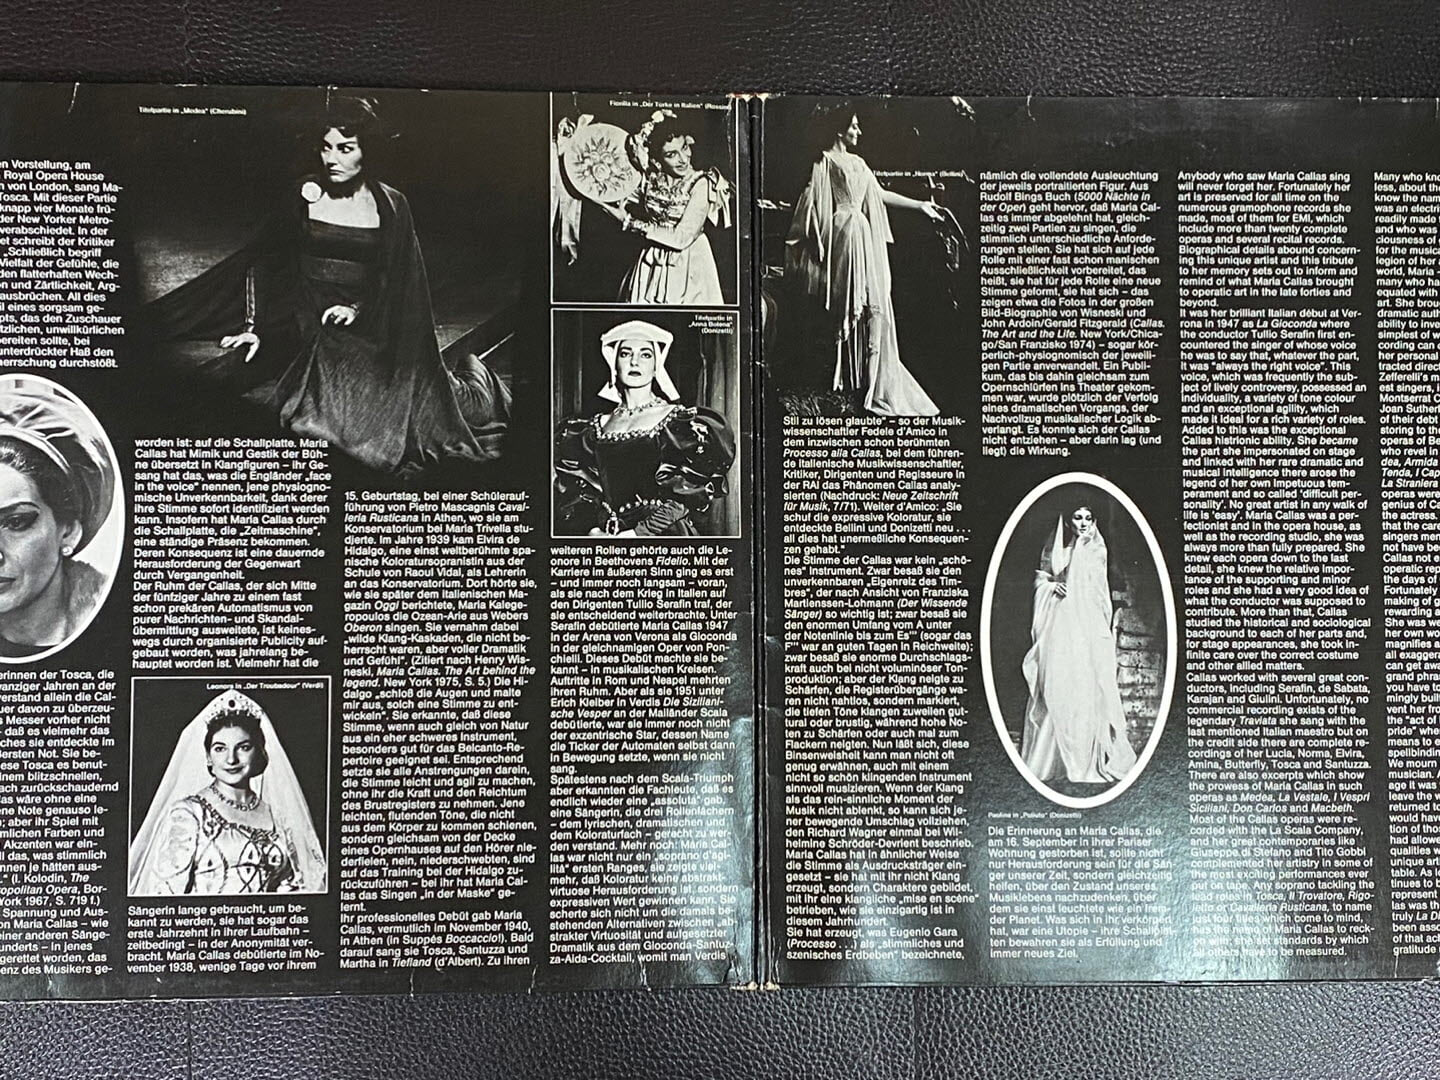 [LP] 마리아 칼라스 - Maria Callas - La Divina (In Ihren Bedeutendsten Aufnahmen 1953-64) 2Lps [독일반]